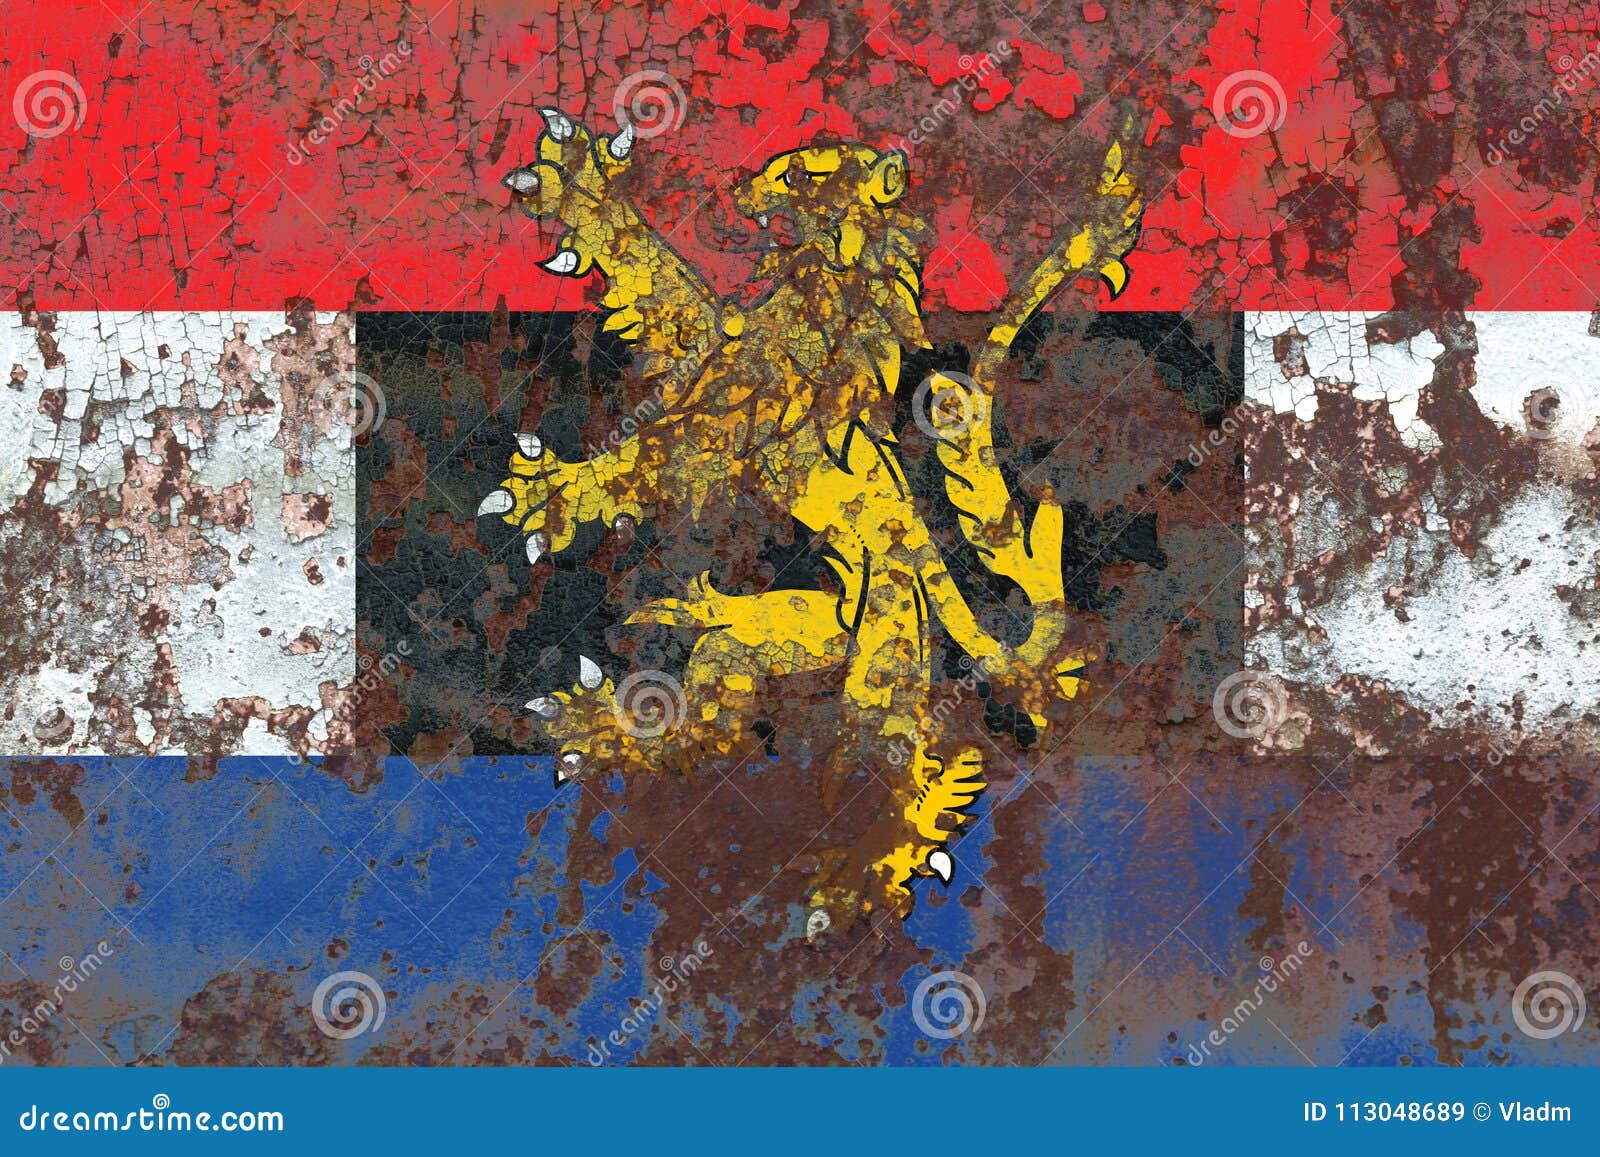 benelux grunge flag, politico-economic union of belgium, nethe